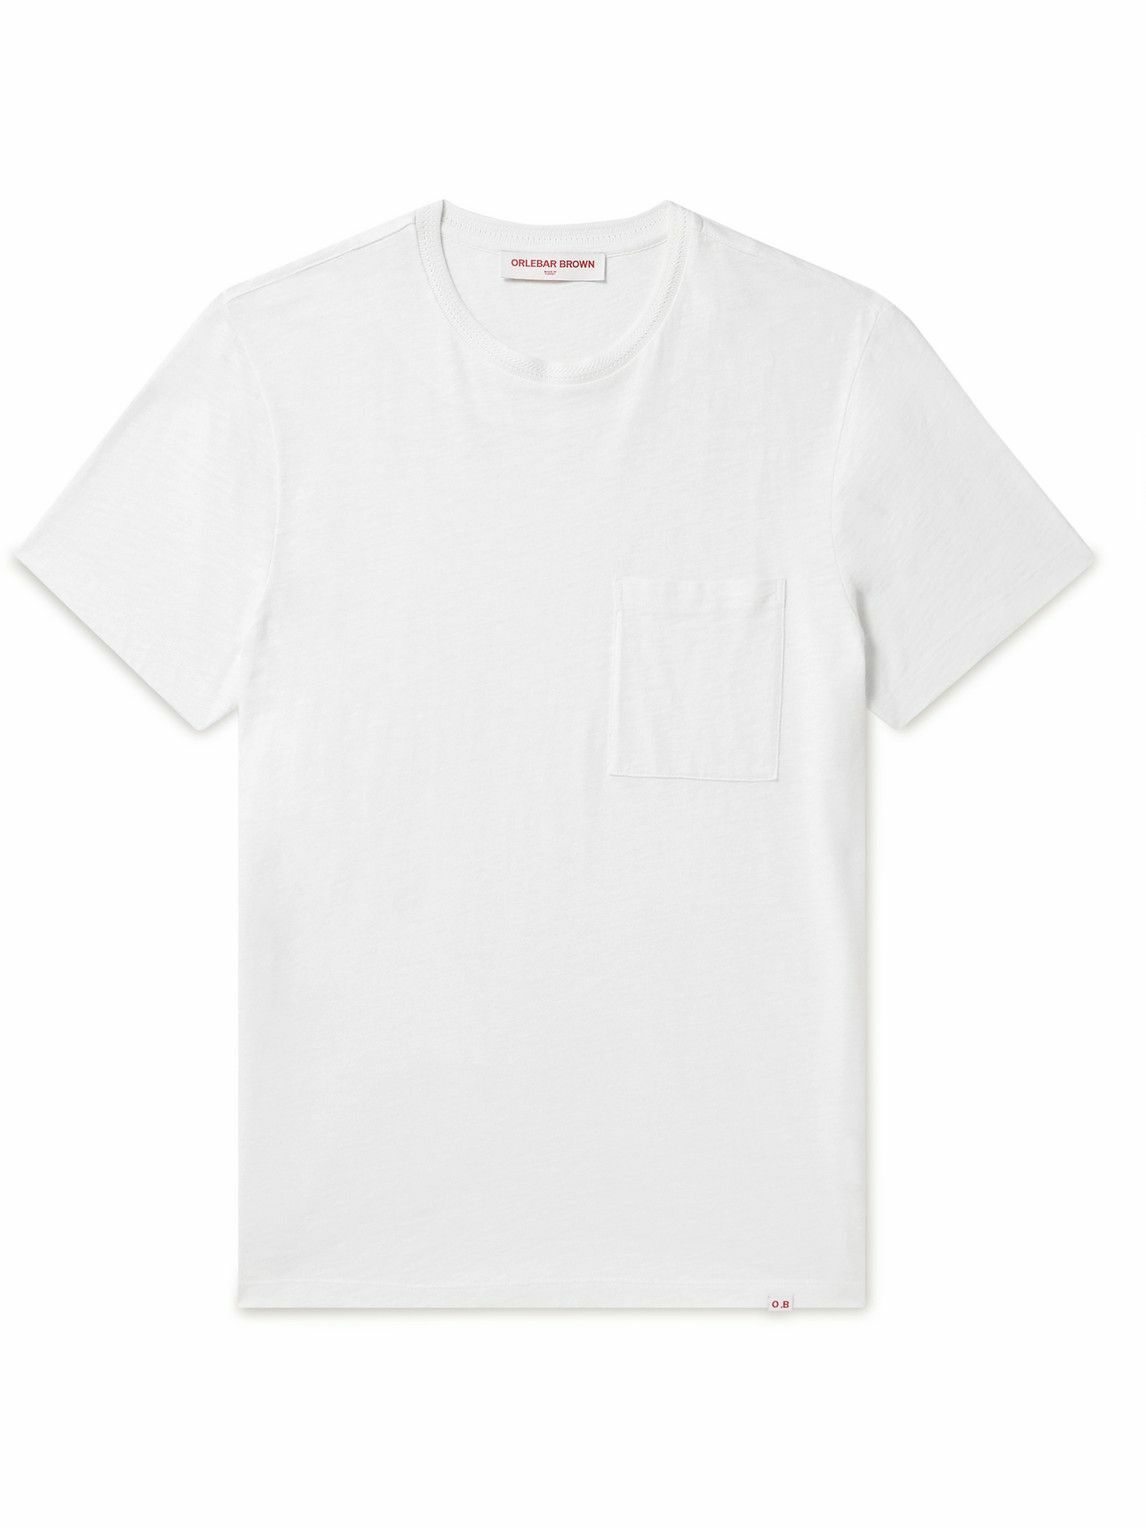 Orlebar Brown - Classic Slub Cotton-Jersey T-Shirt - White Orlebar Brown